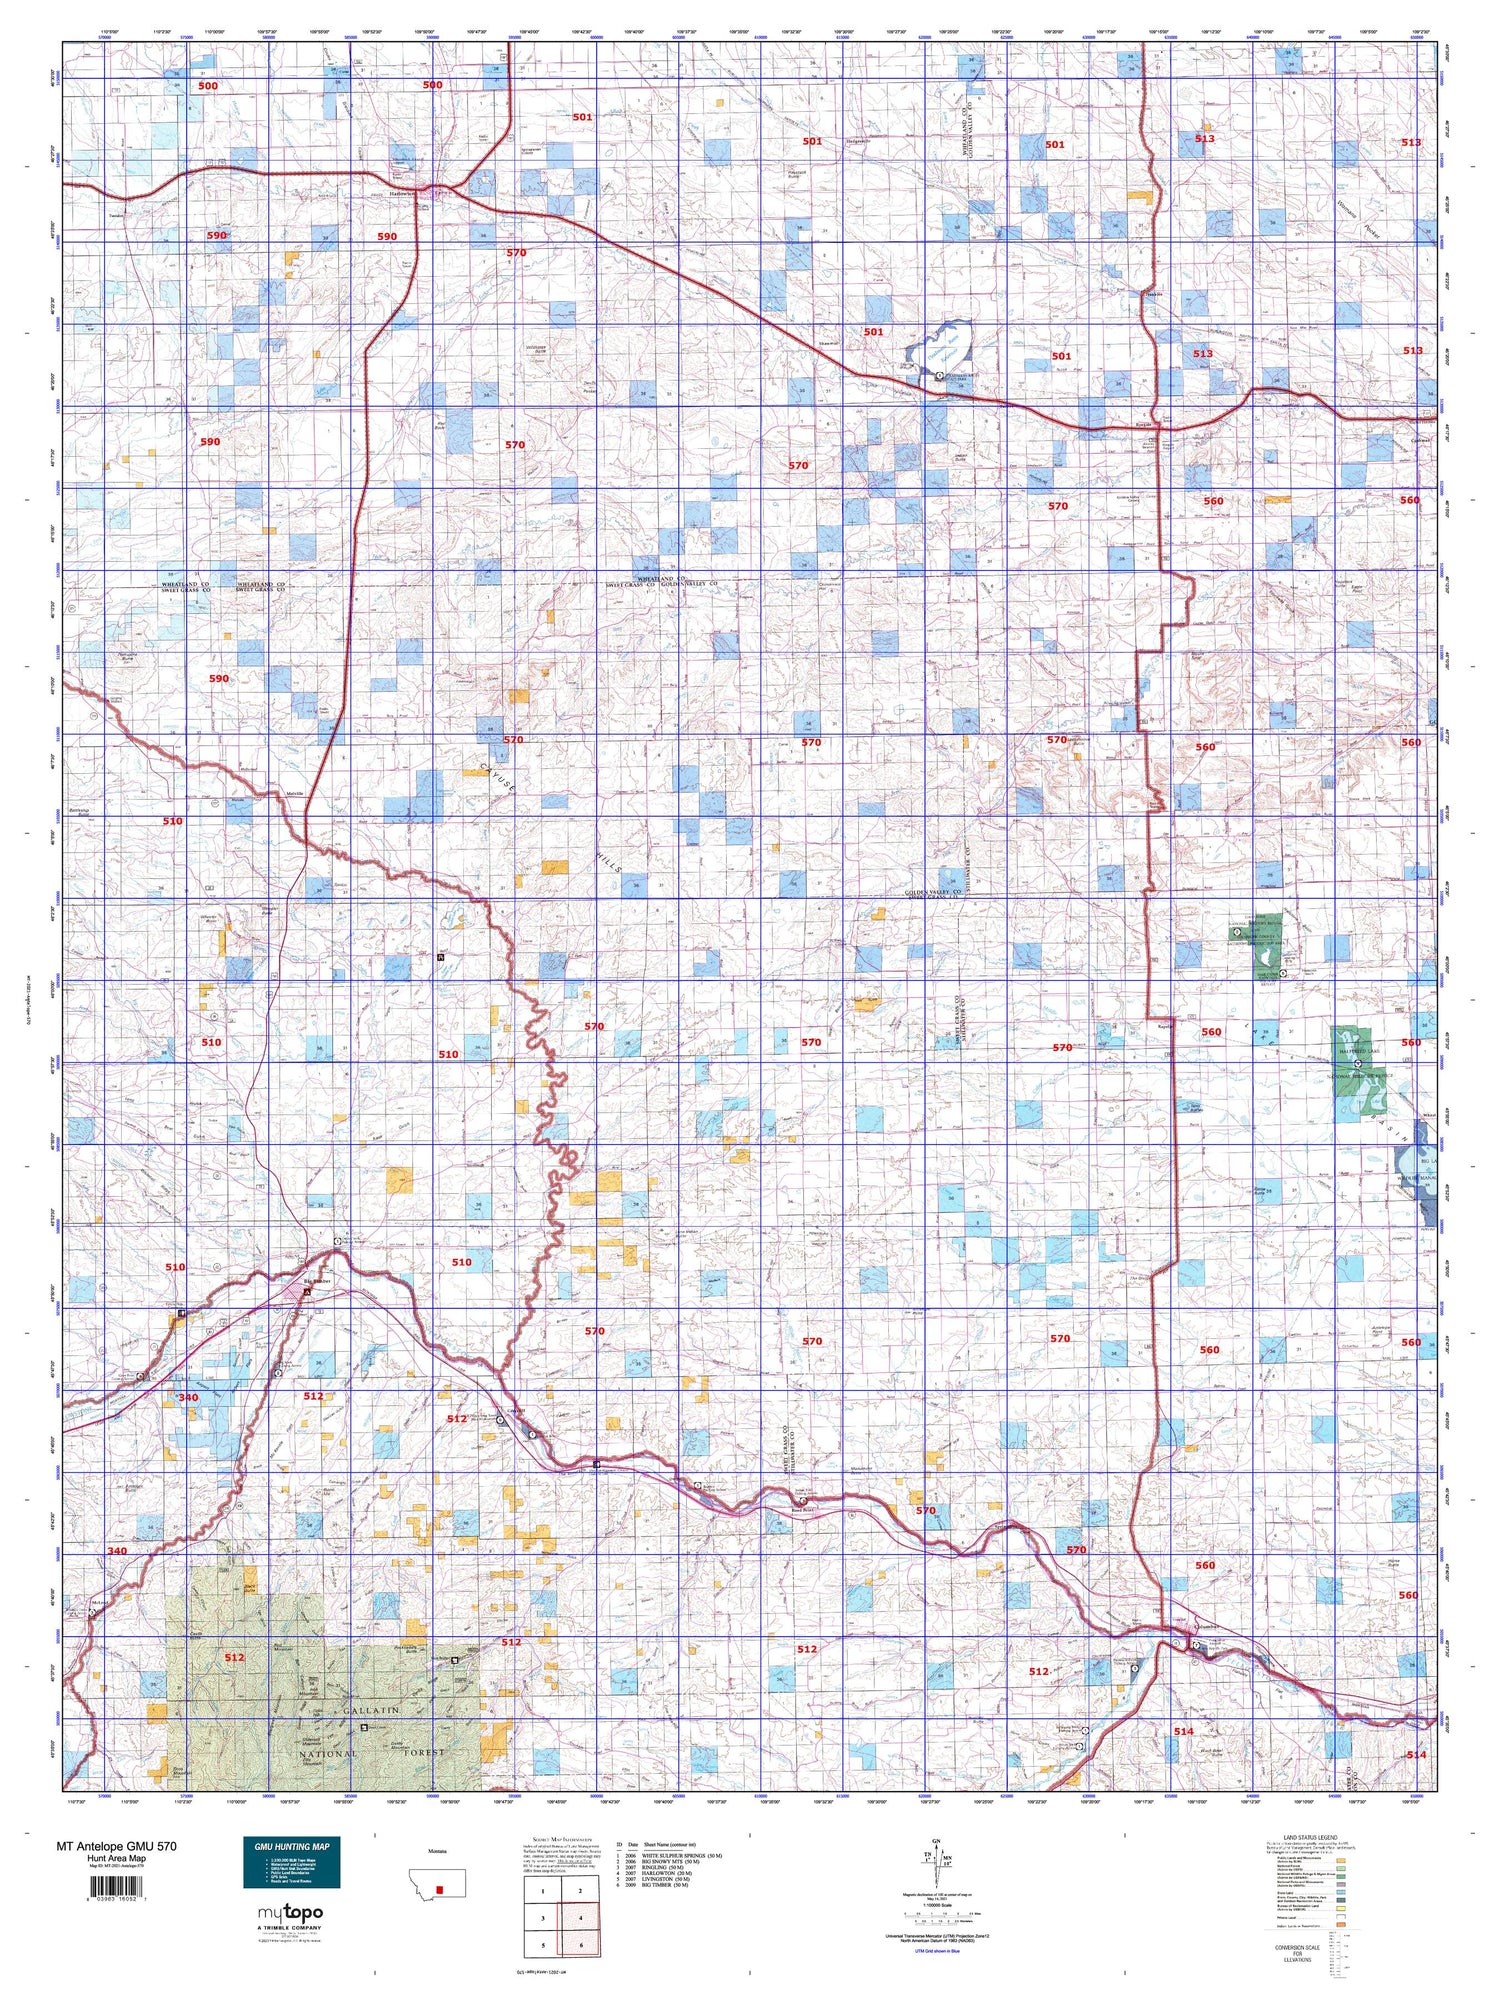 Montana Antelope GMU 570 Map Image